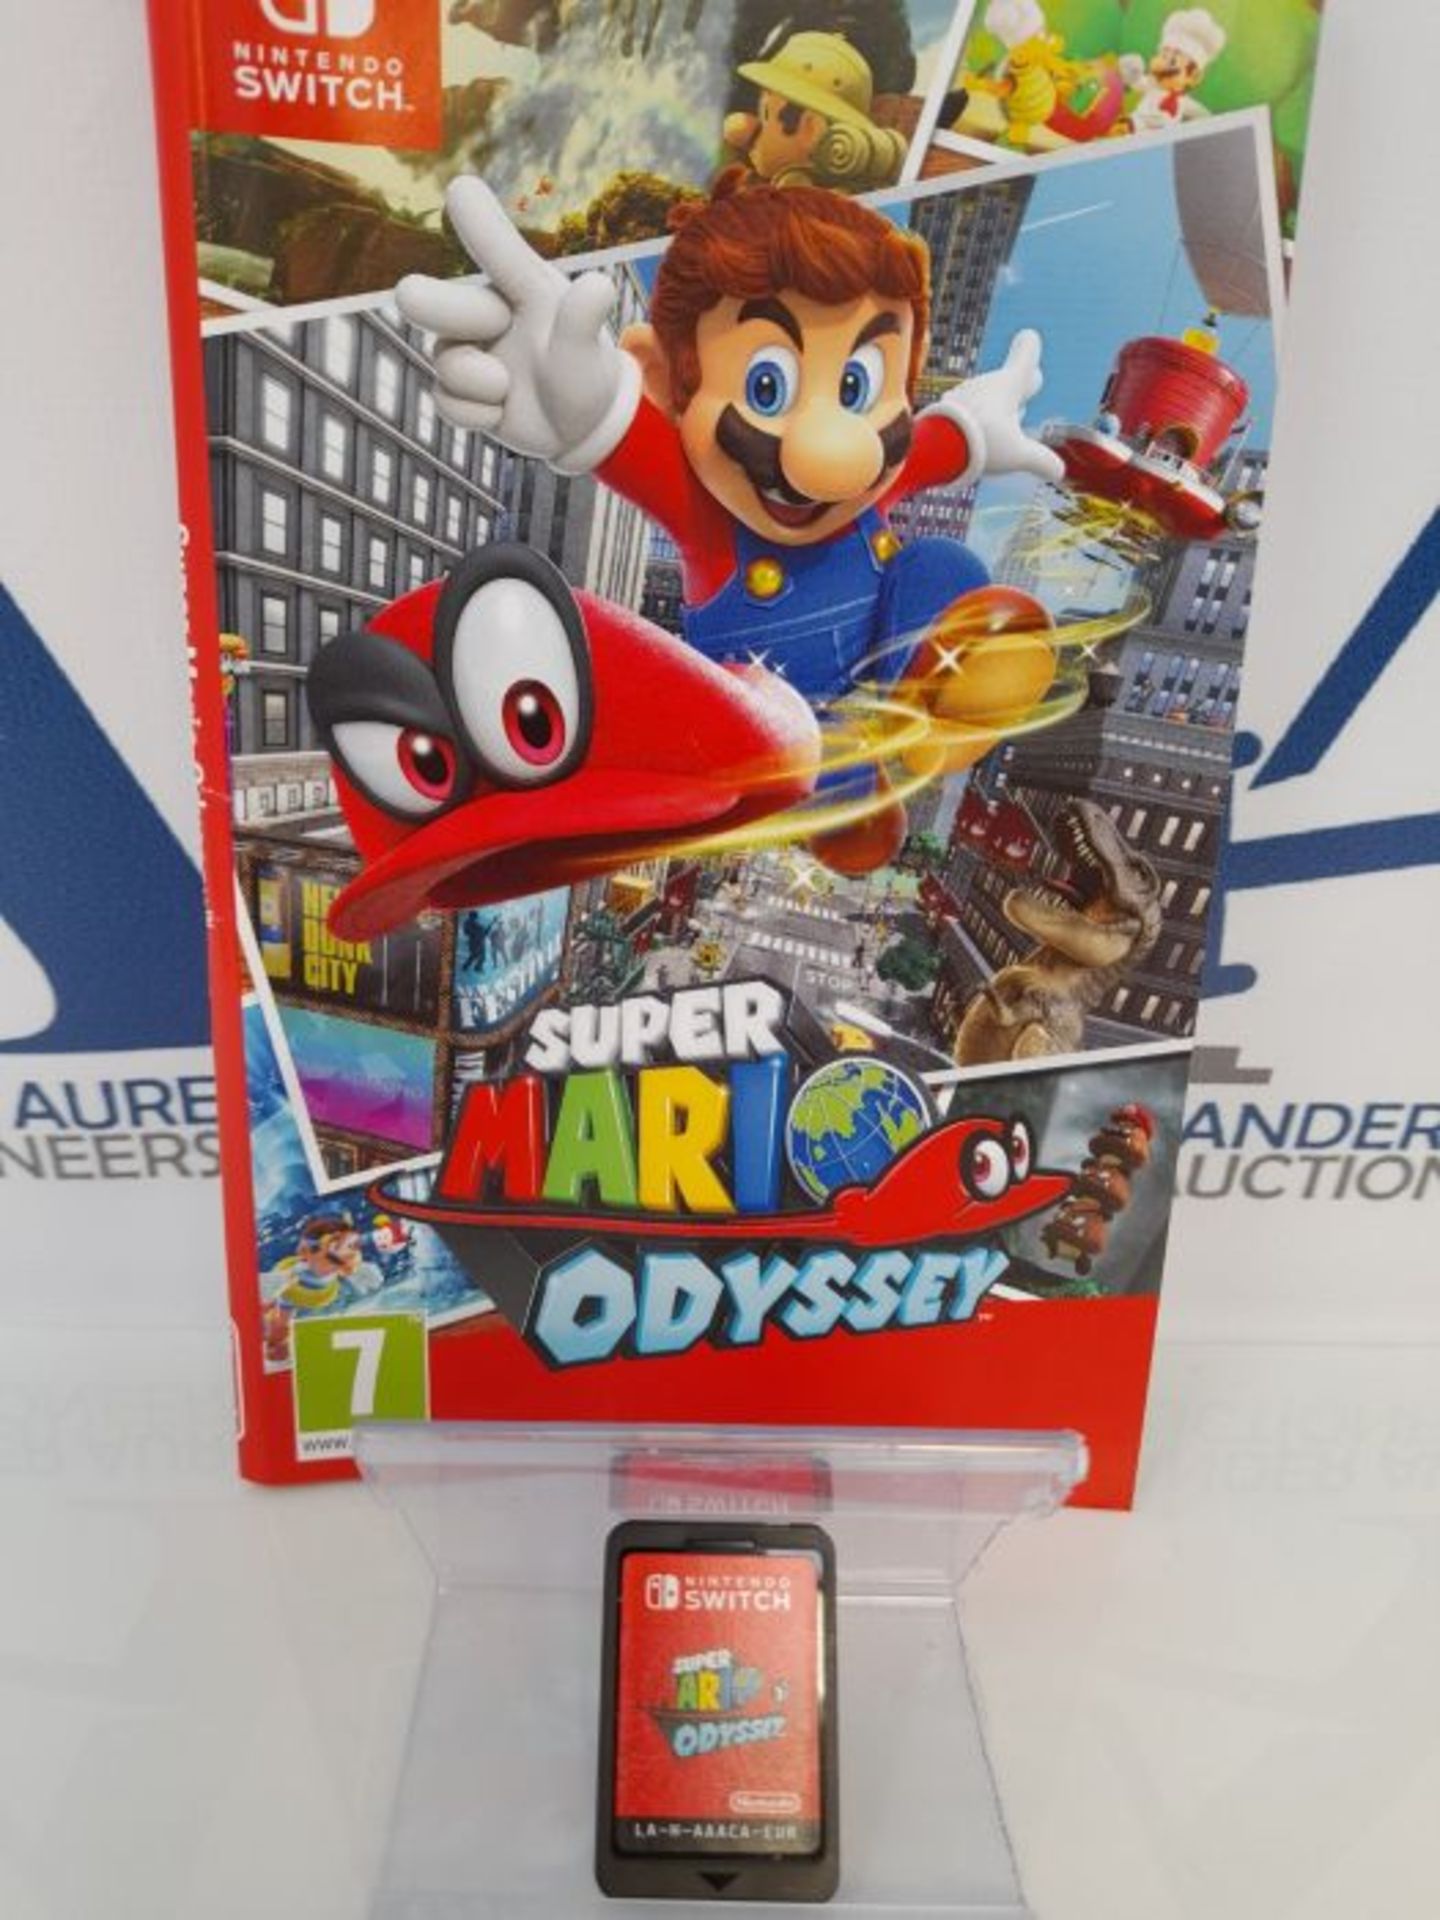 Super Mario Odyssey - Nintendo Switch - Image 2 of 3